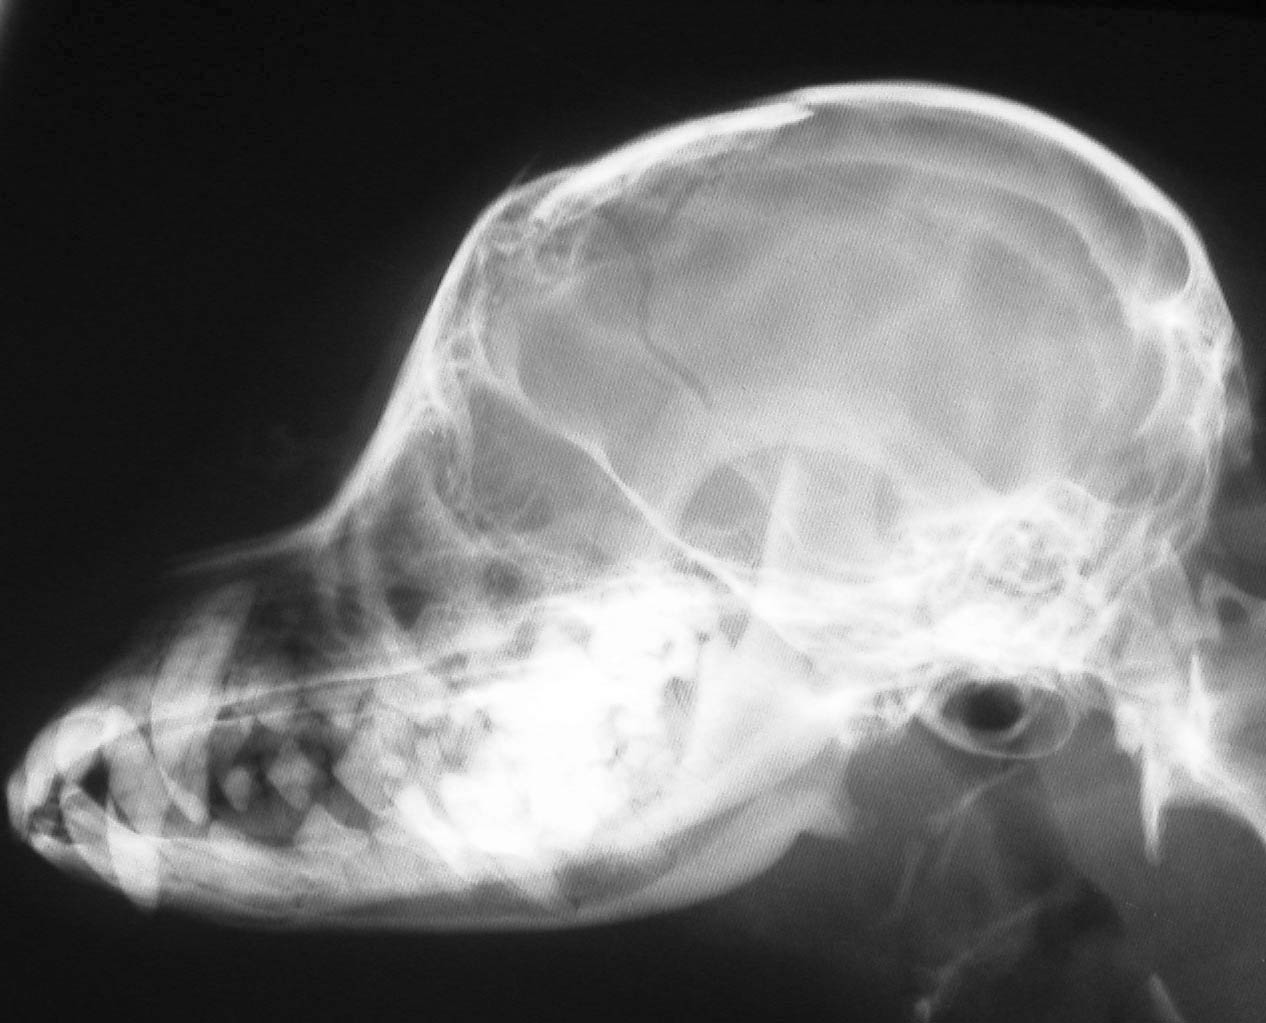 Skull Fracture Brain Contusion 頭蓋骨骨折 脳挫傷 獣医神経疾患画像集